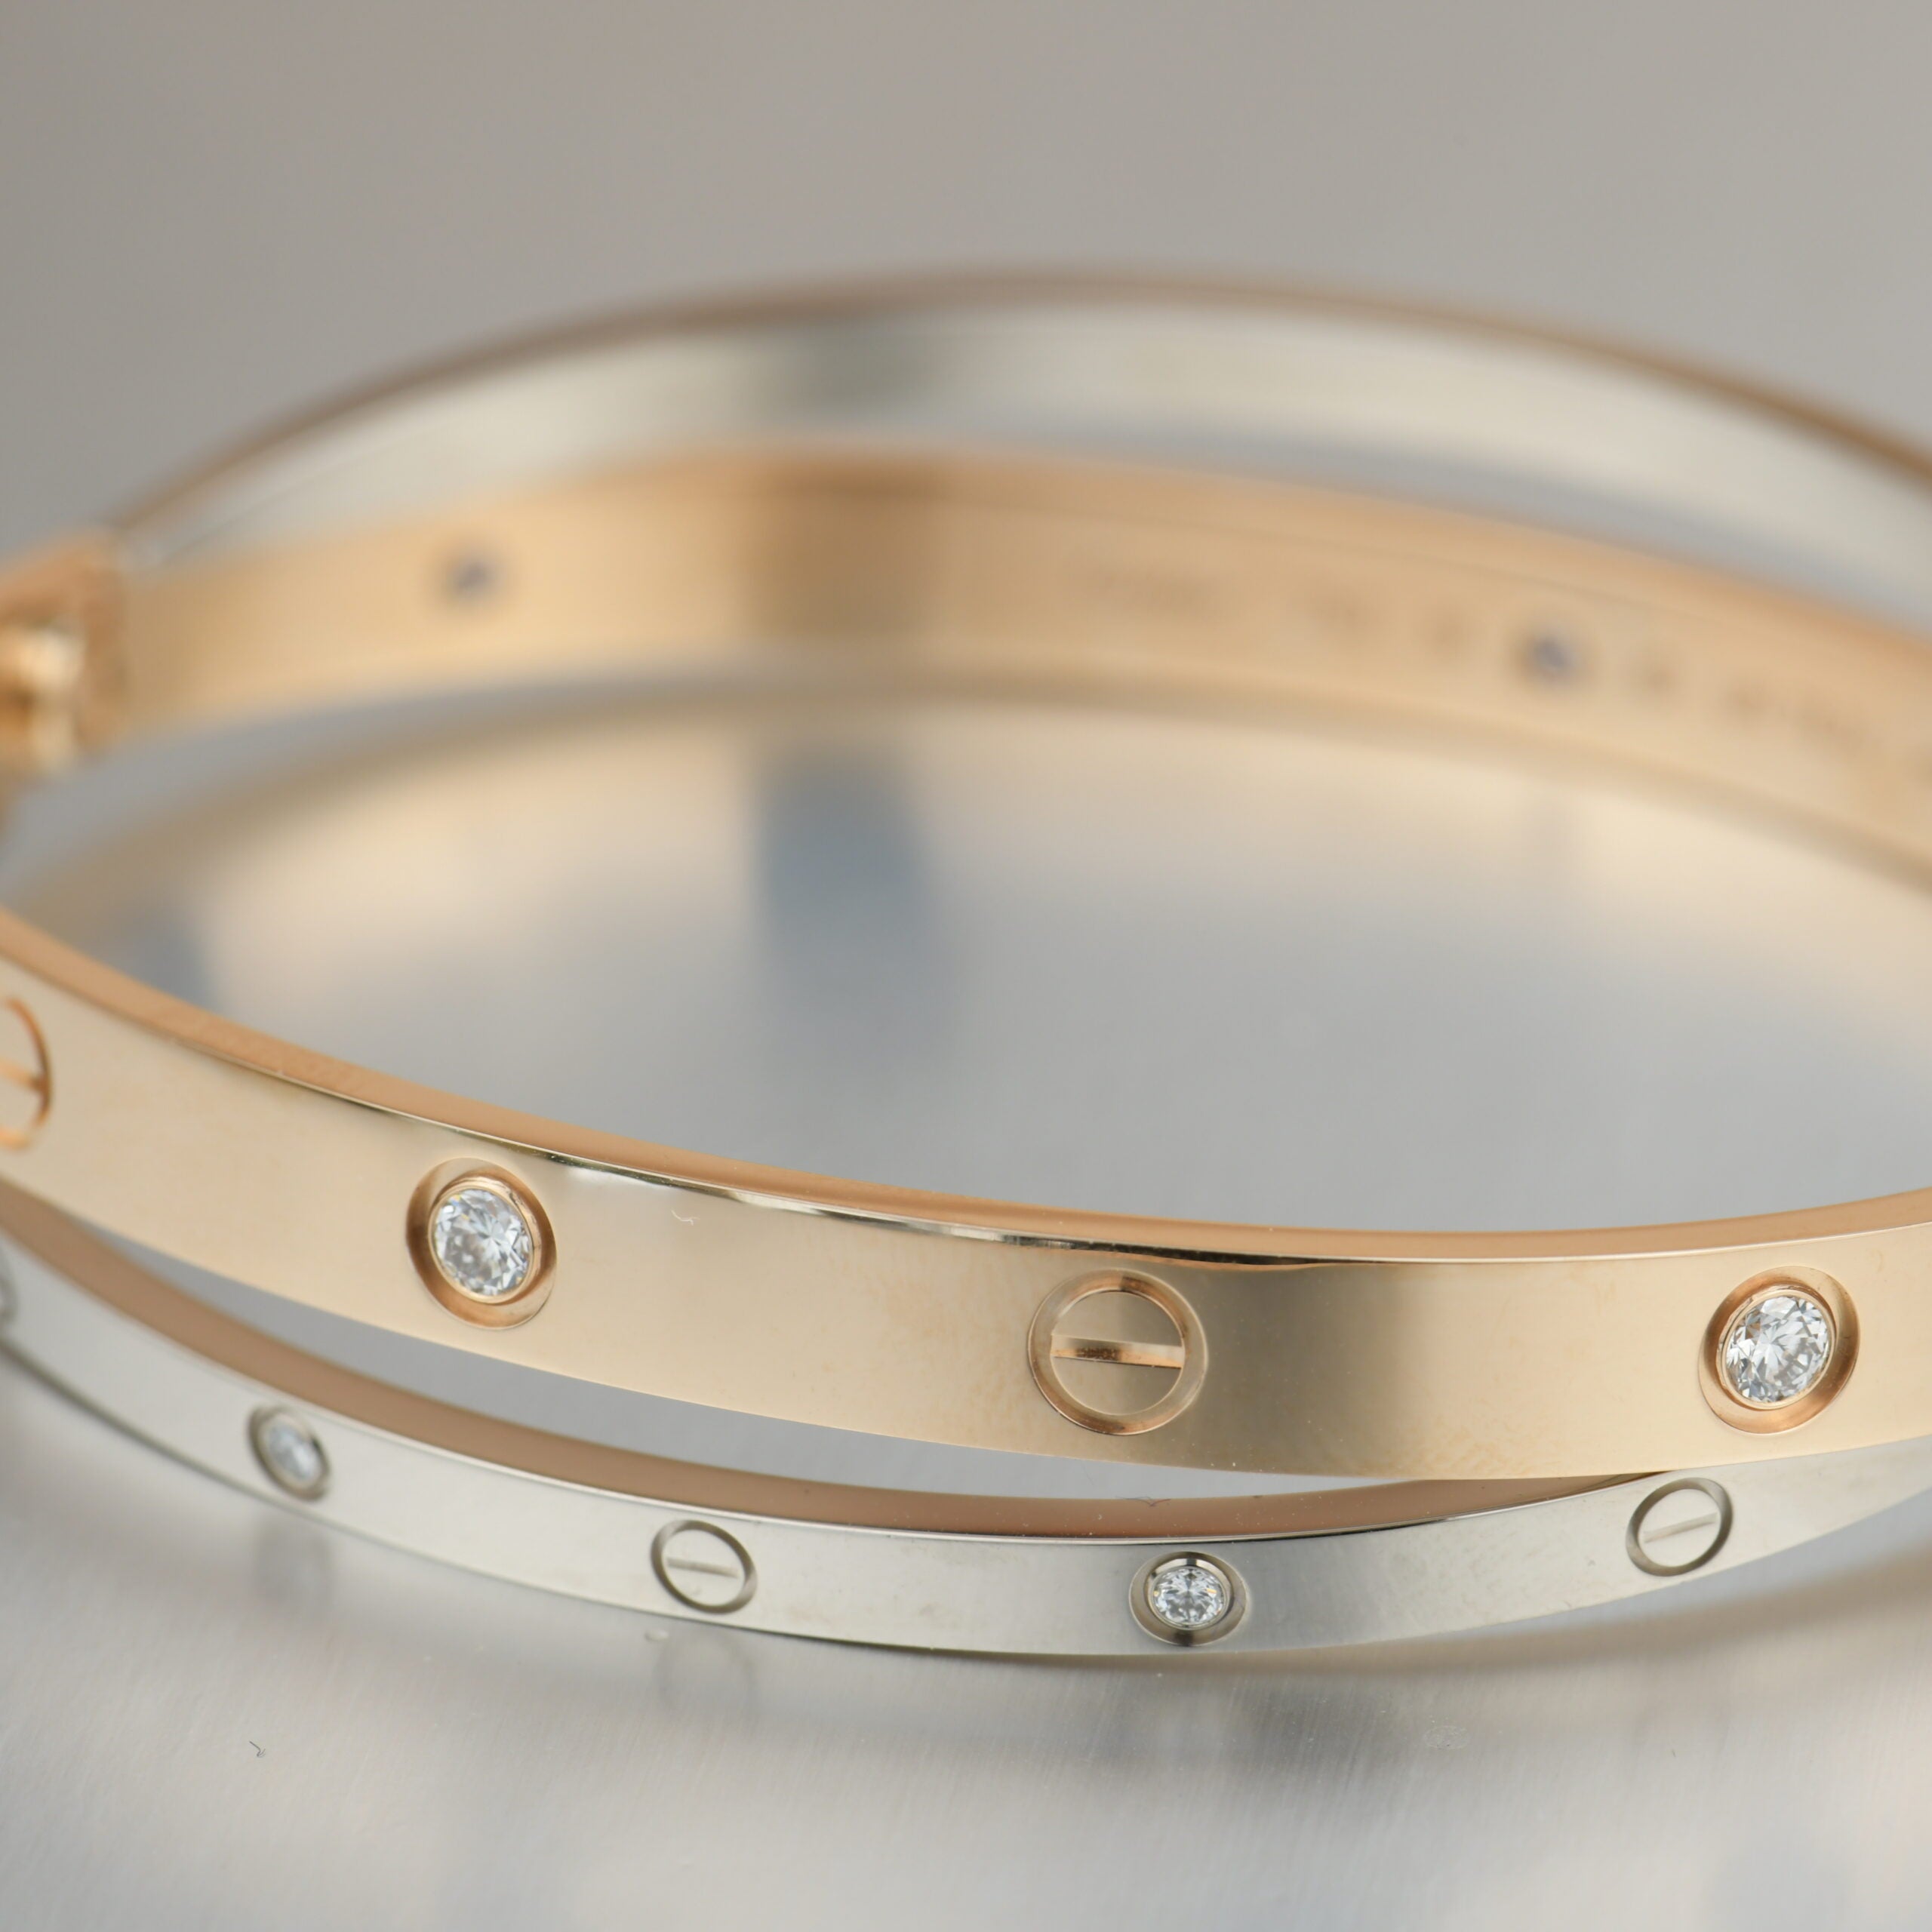 Shop Bracelets for Women and Men Online – PALMONAS